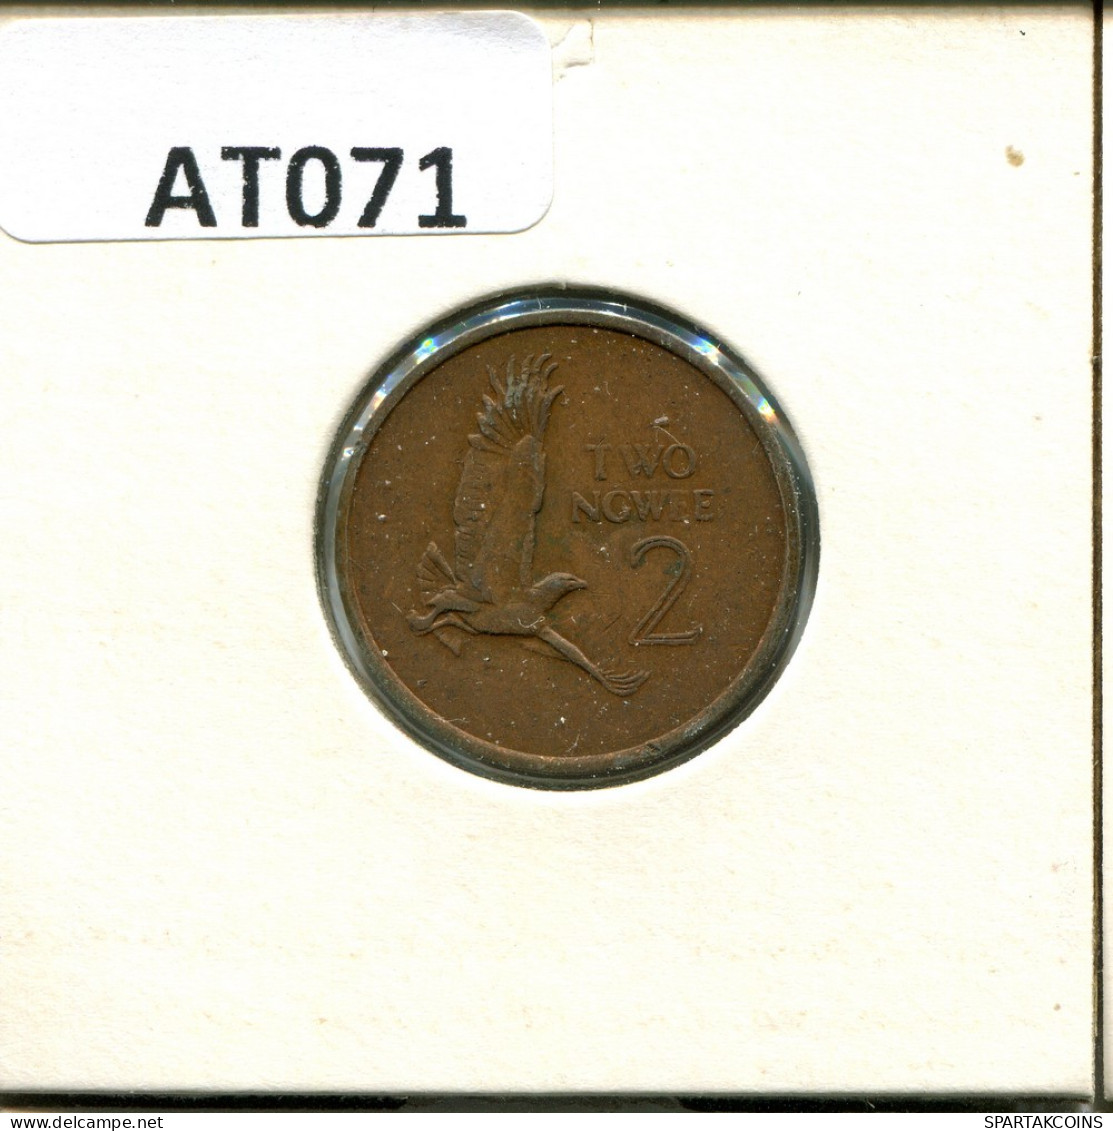 2 NGWEE 1982 ZAMBIA Coin #AT071.U - Zambia